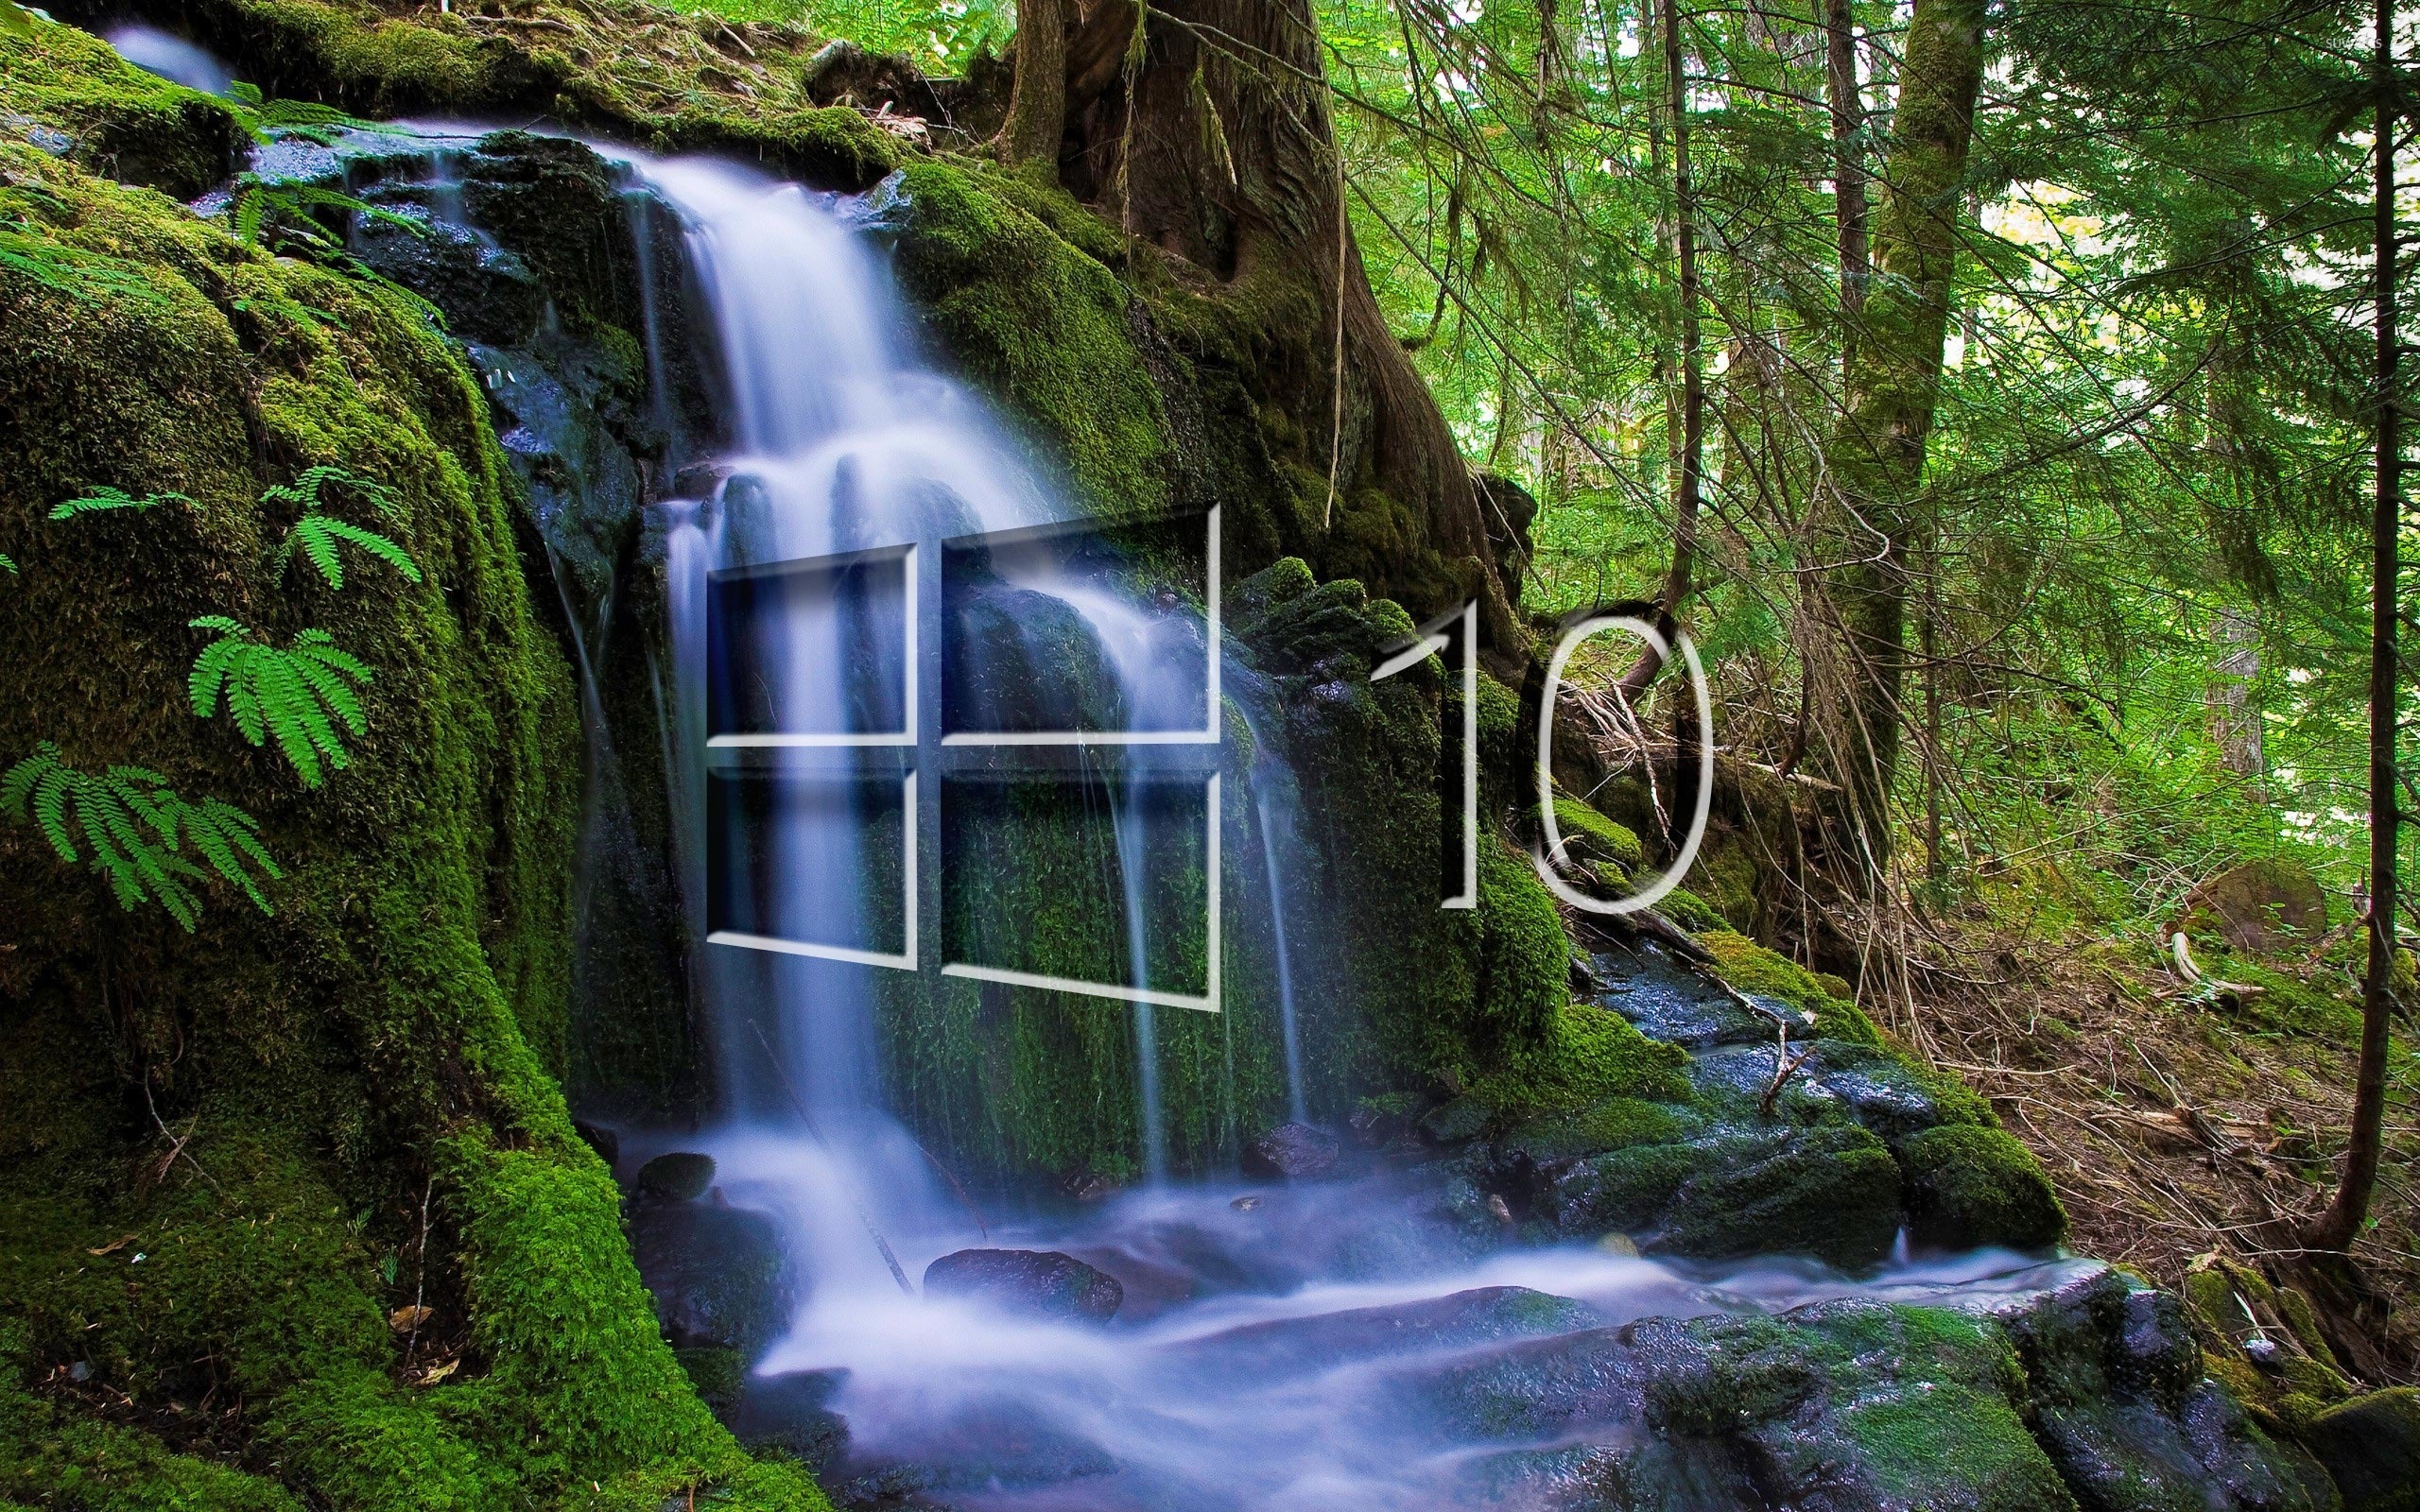 Windows 10 over the waterfall glass logo wallpaper - Computer